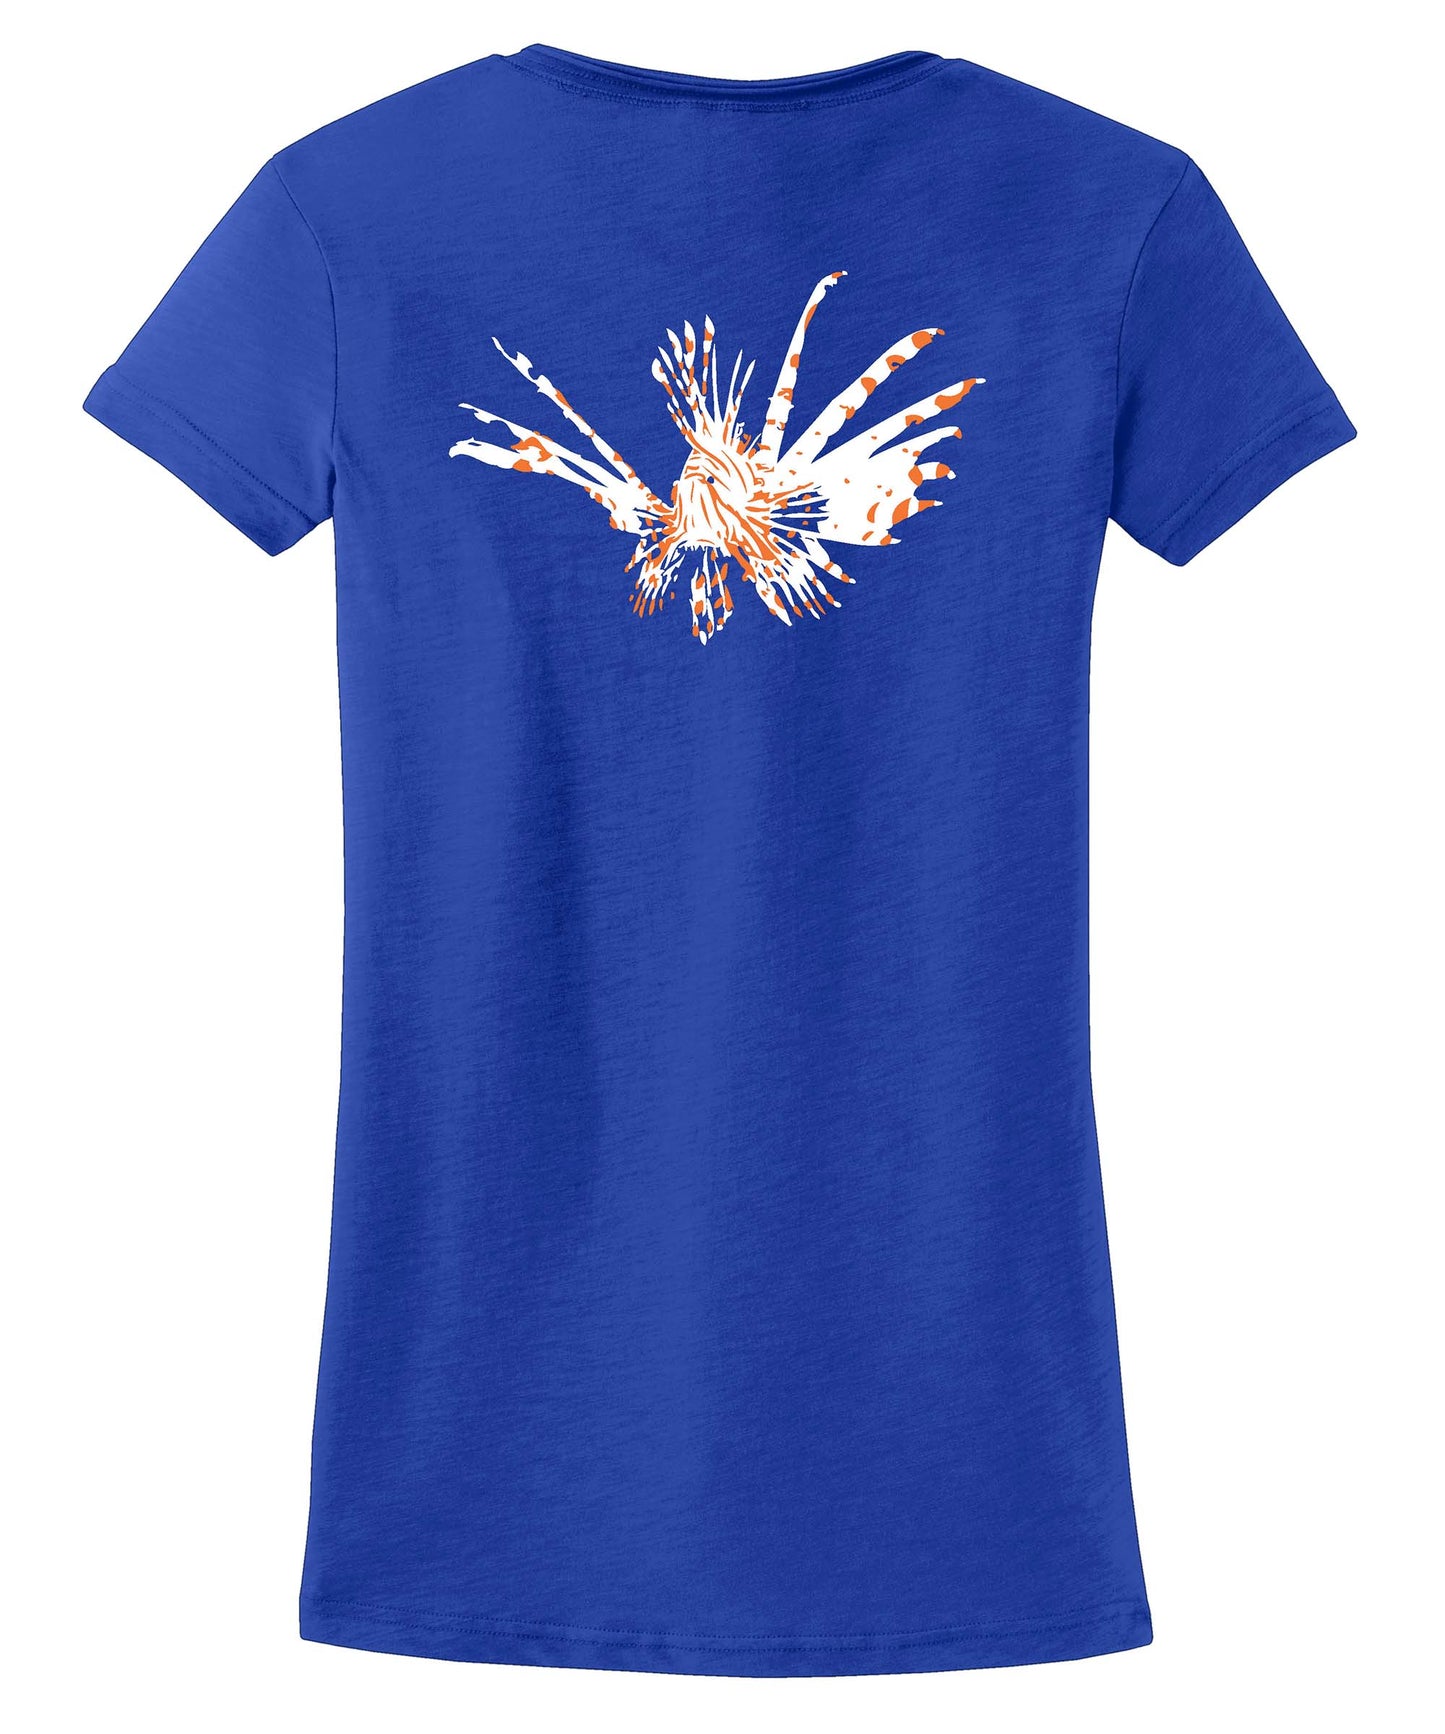 Ladies Lionfish Cotton V-neck t-shirt in Royal Blue